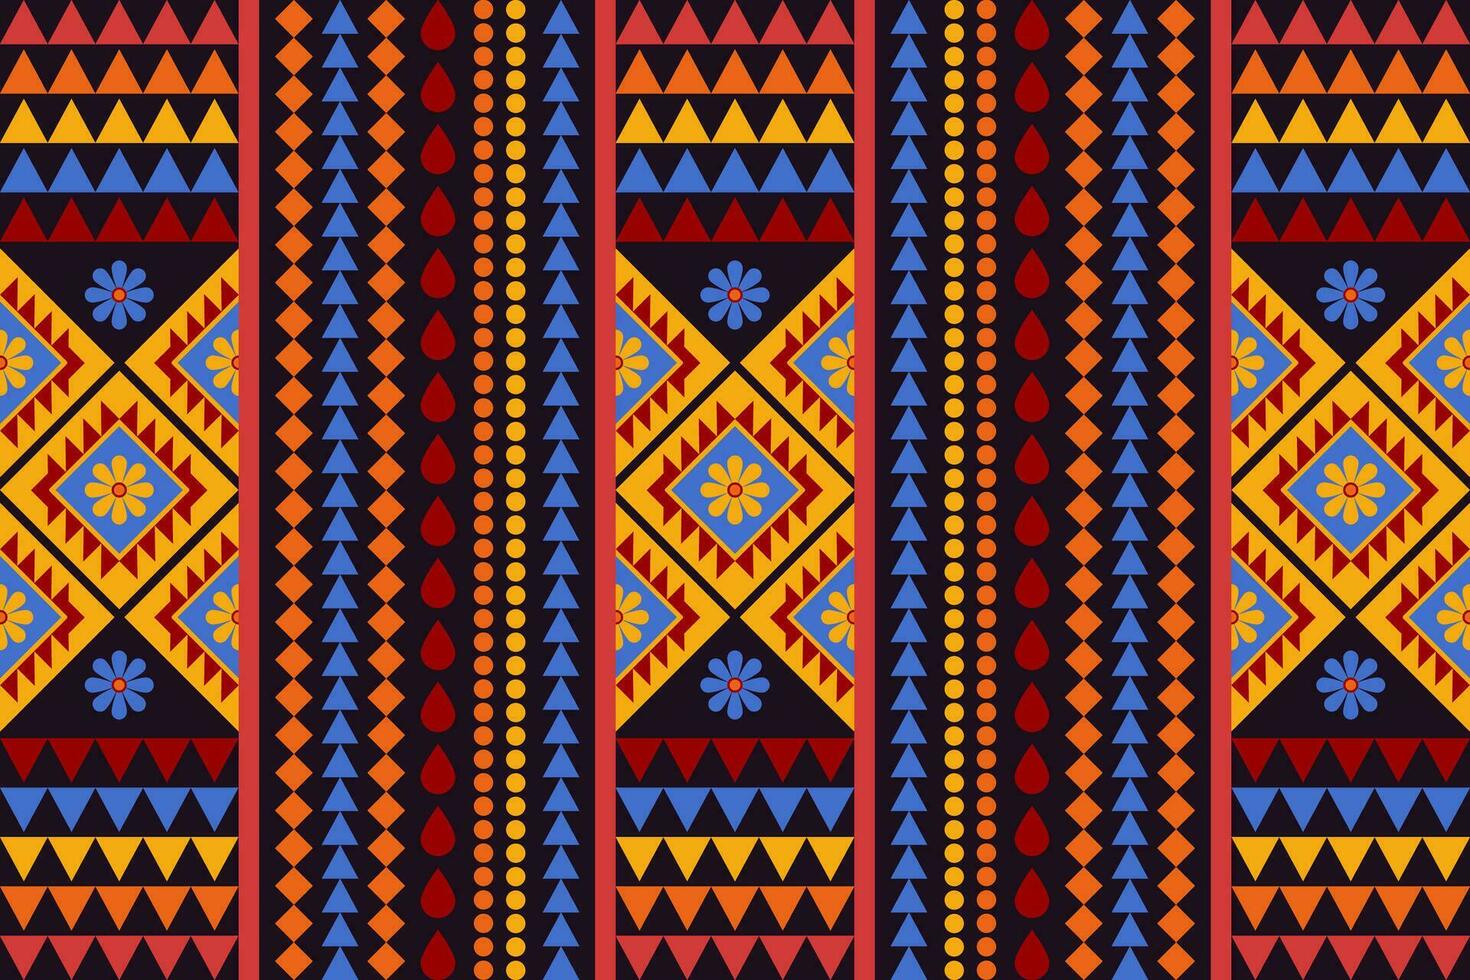 geométrico étnico modelo tradicional diseño para fondo, alfombra, fondo de pantalla, ropa, envase, batik, tela, vector ilustración bordado estilo. tribal modelo